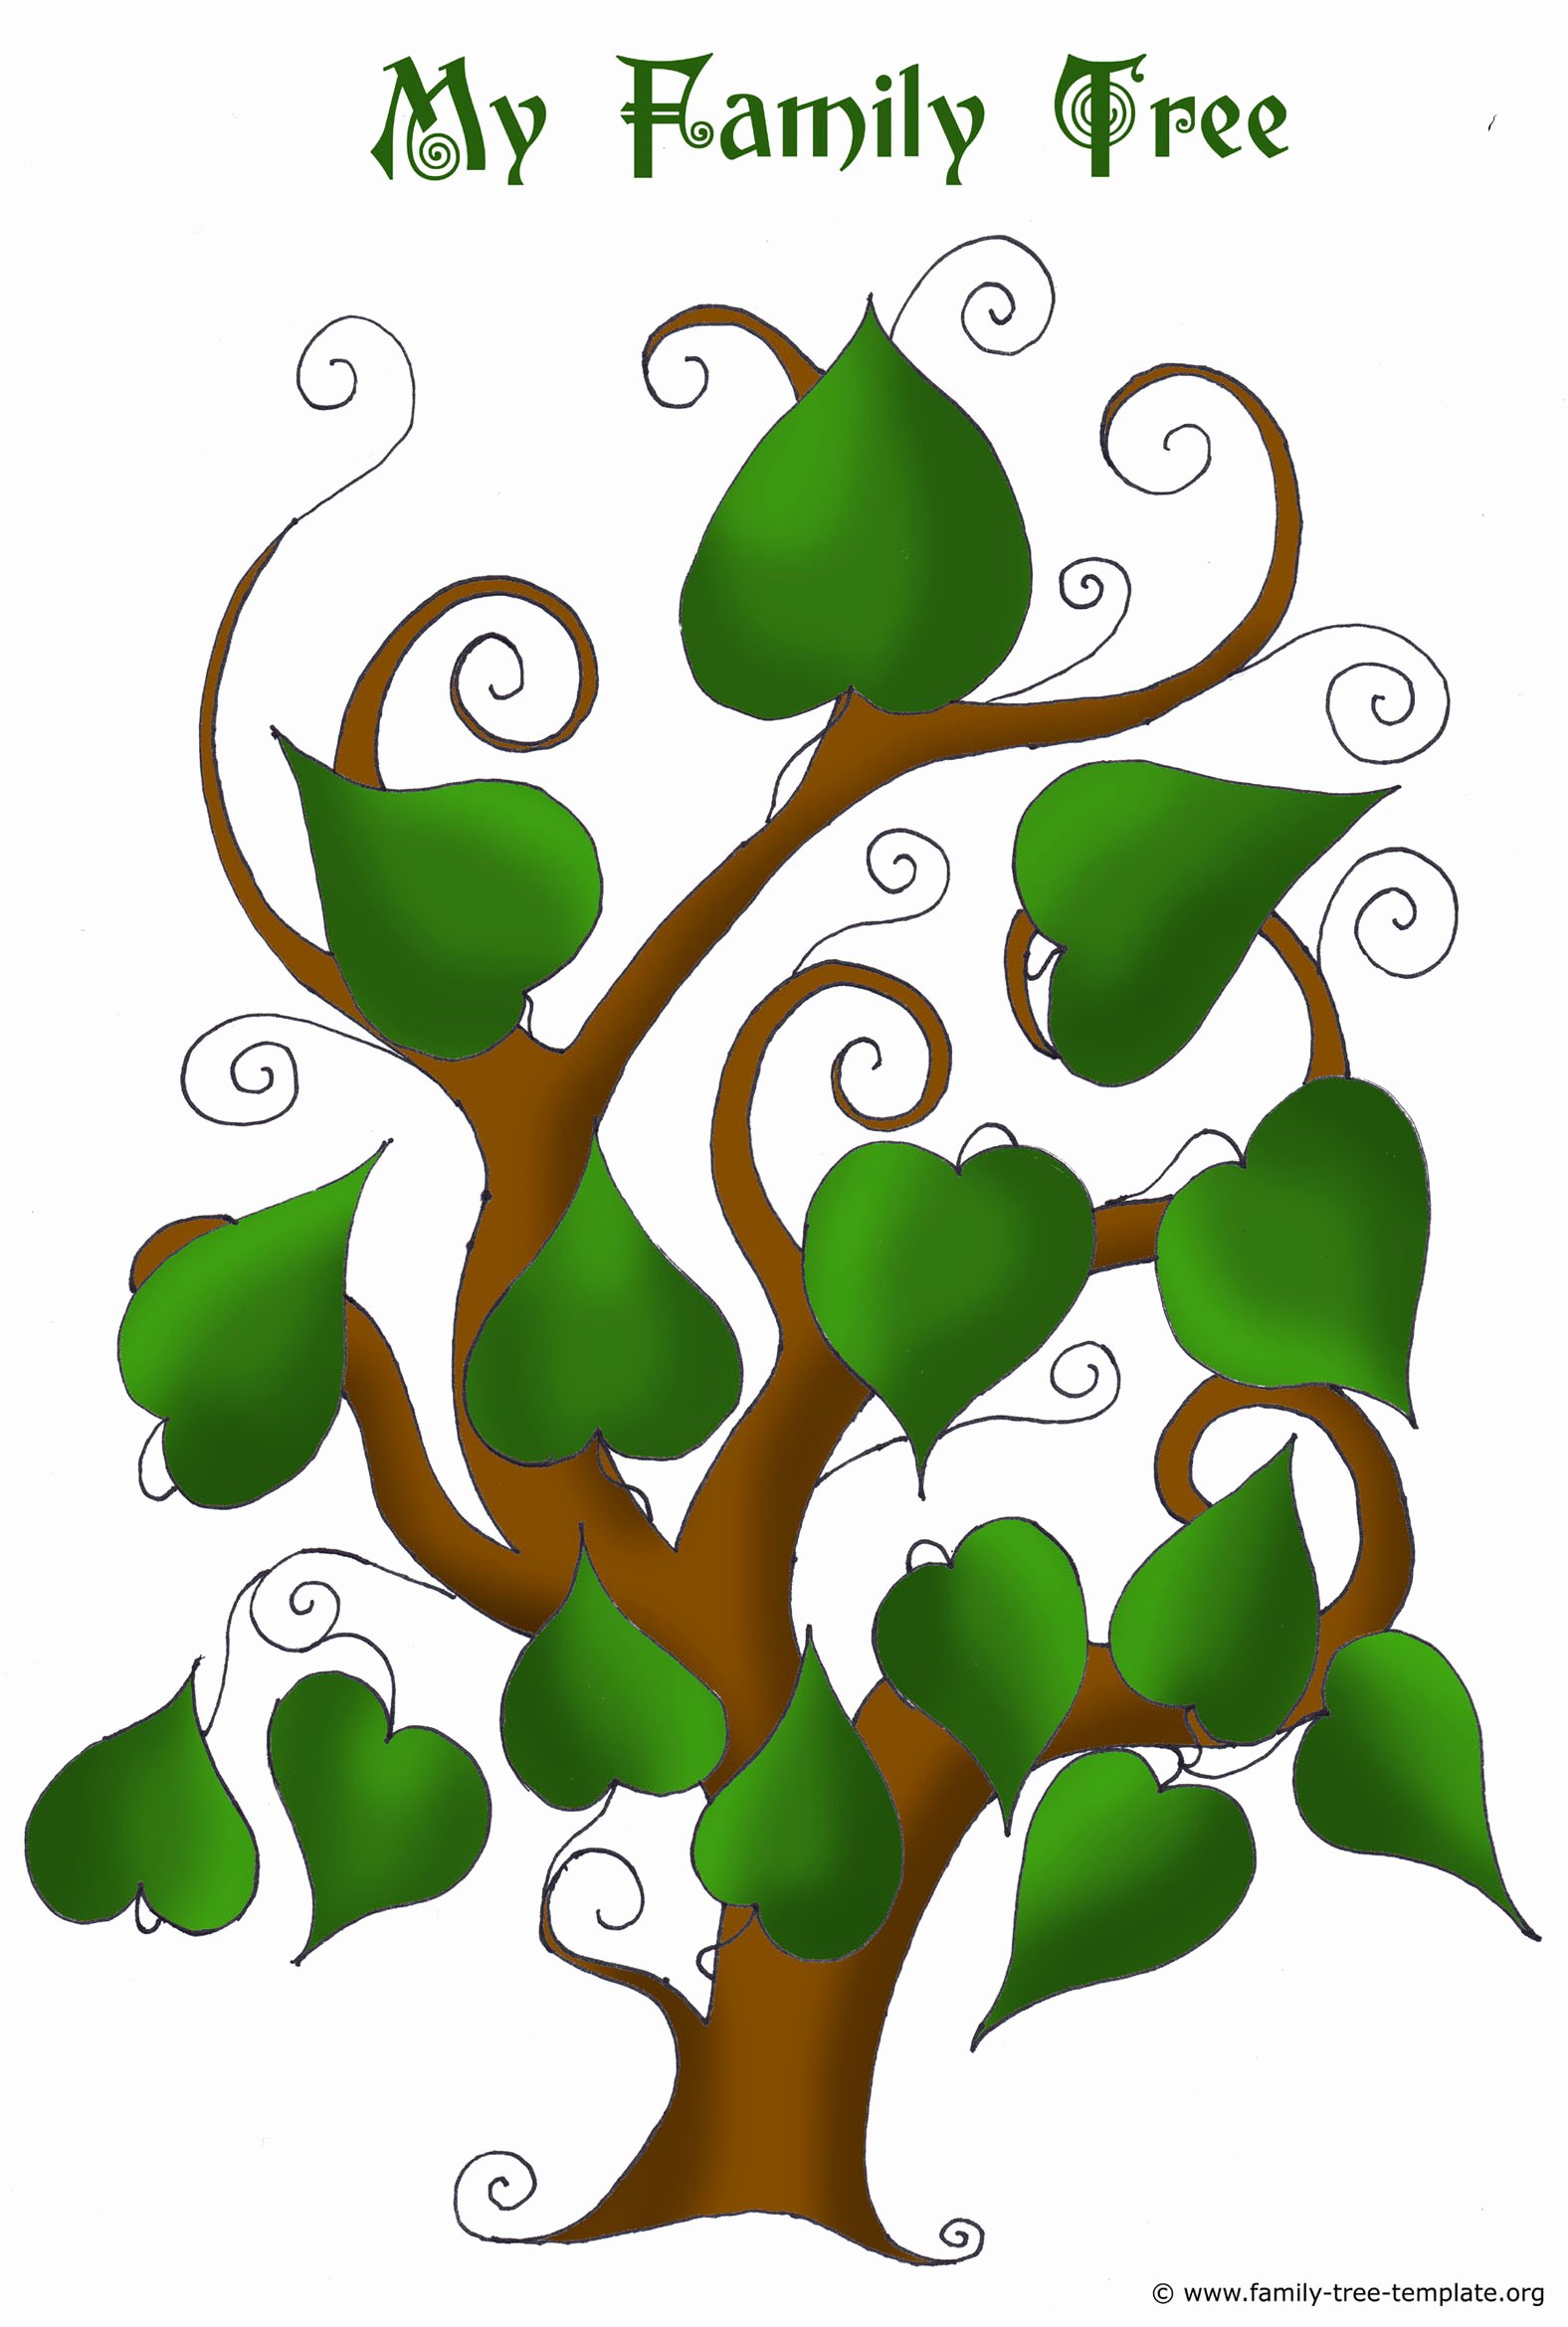 Free Family Tree Templates New Free Family Tree Templates Using Free Ancestry